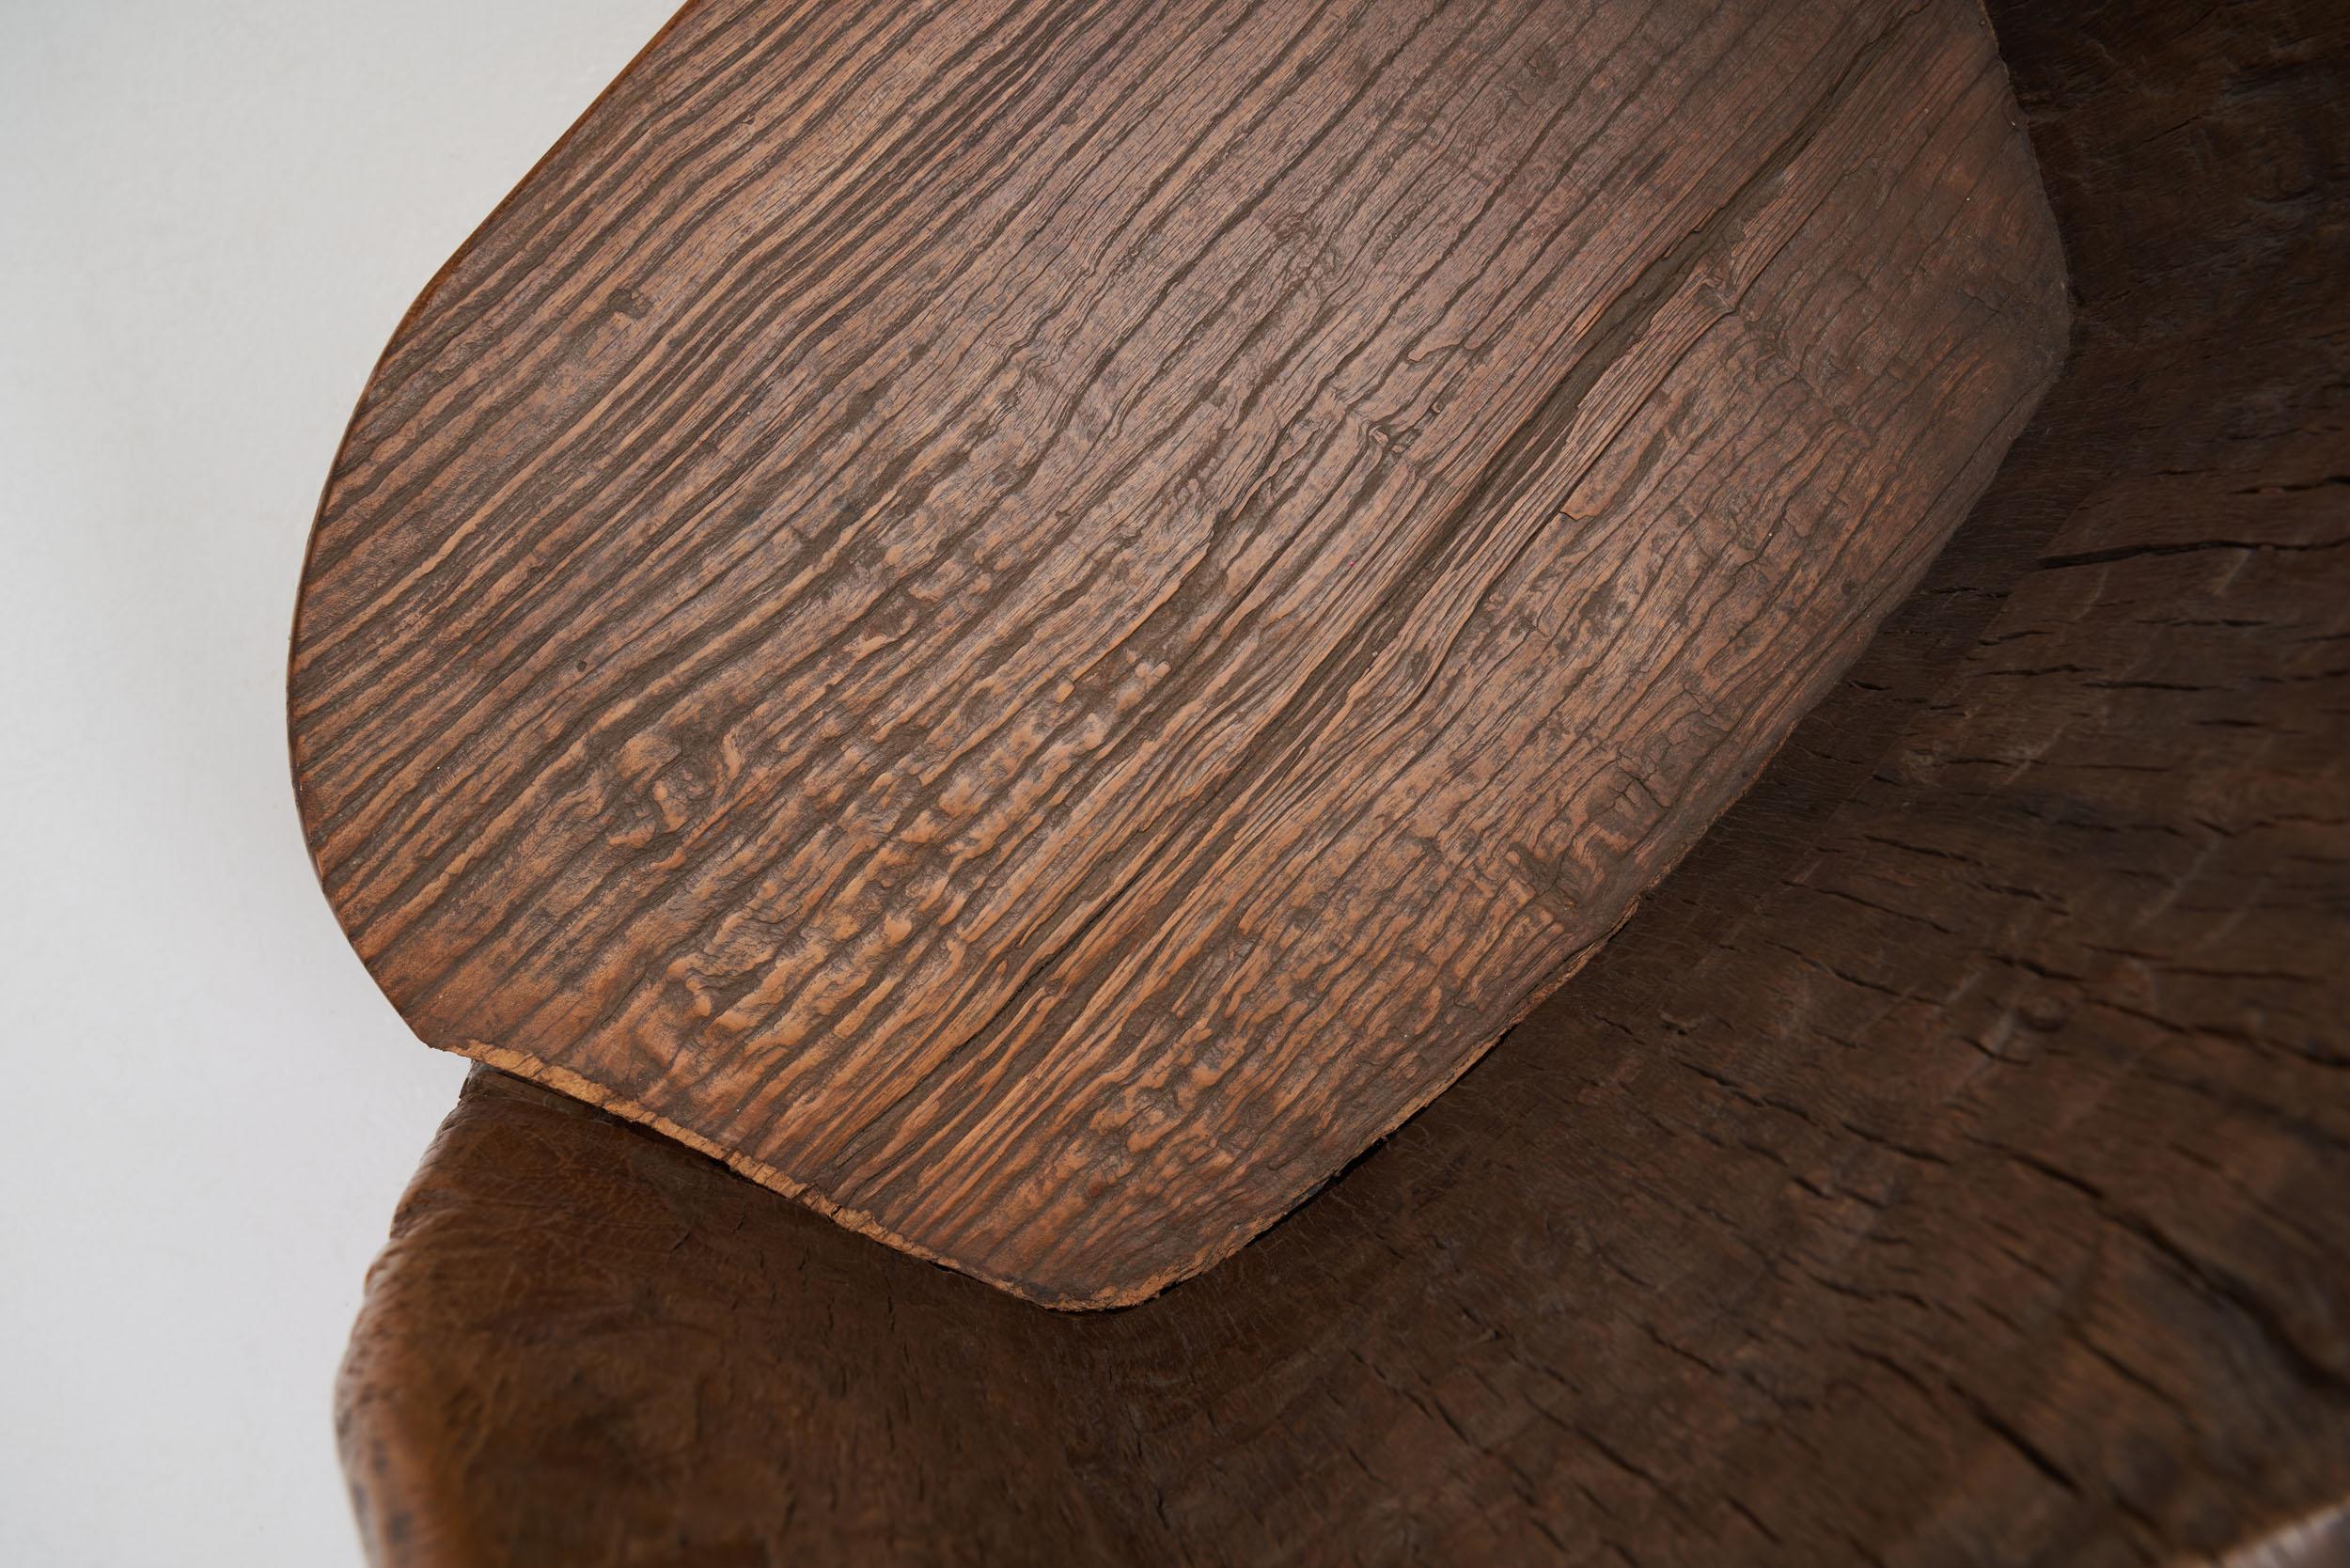 Tibetan Carved Wood “Tête a Tête” Love Seat, Tibet 19th Century For Sale 13